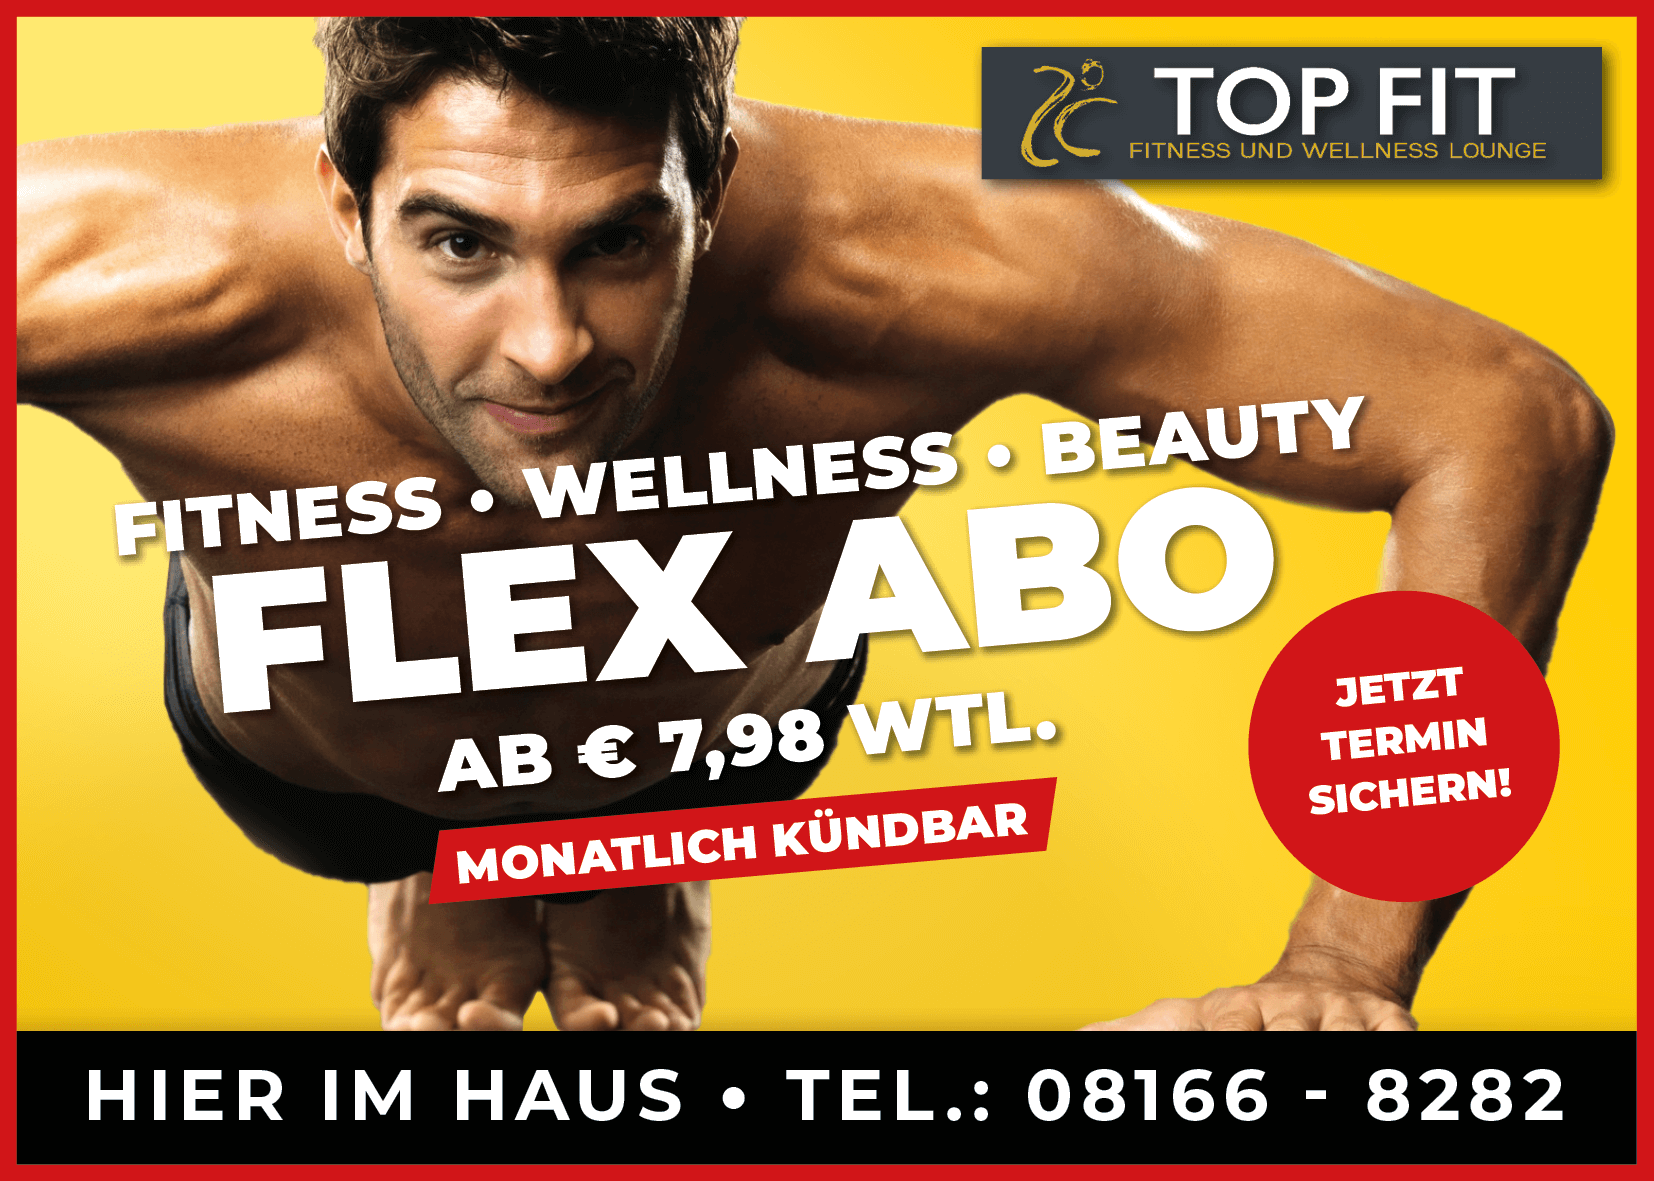 Fitness - Wellness - Beauty im Flex Abo